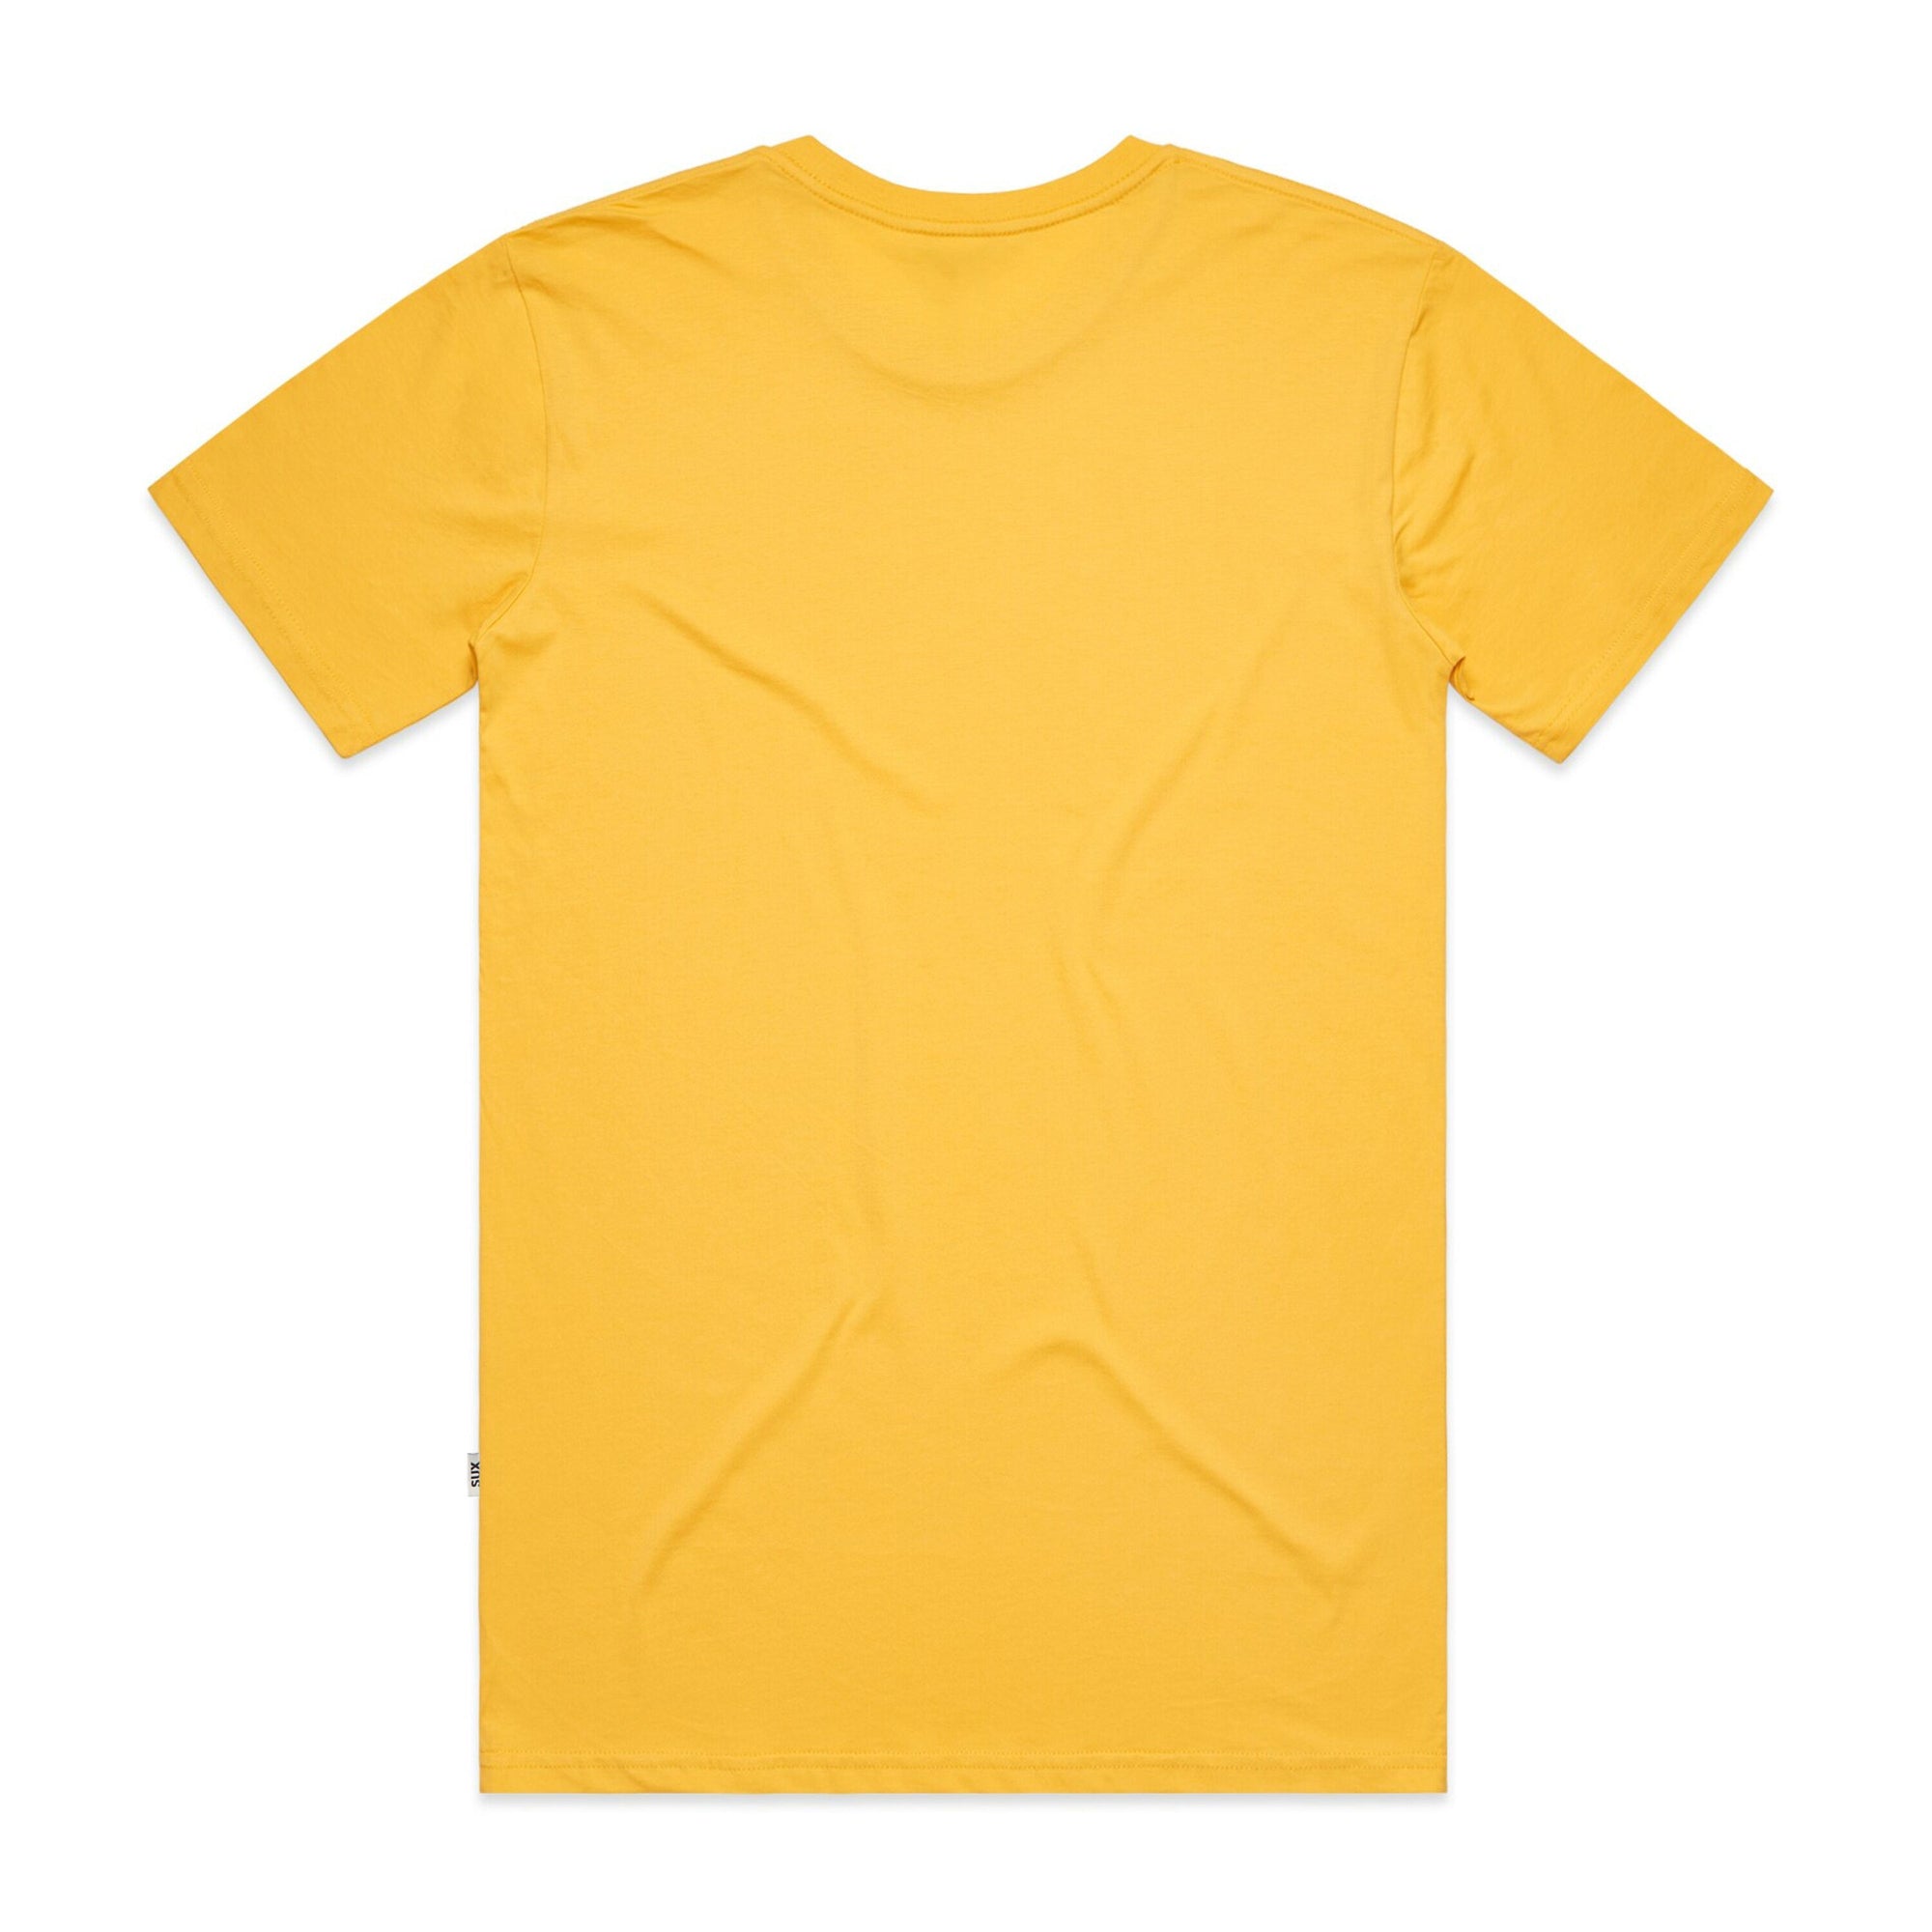 birds-of-condor-yellow-spring-rolls-golf-ball-tee-t-shirt-front